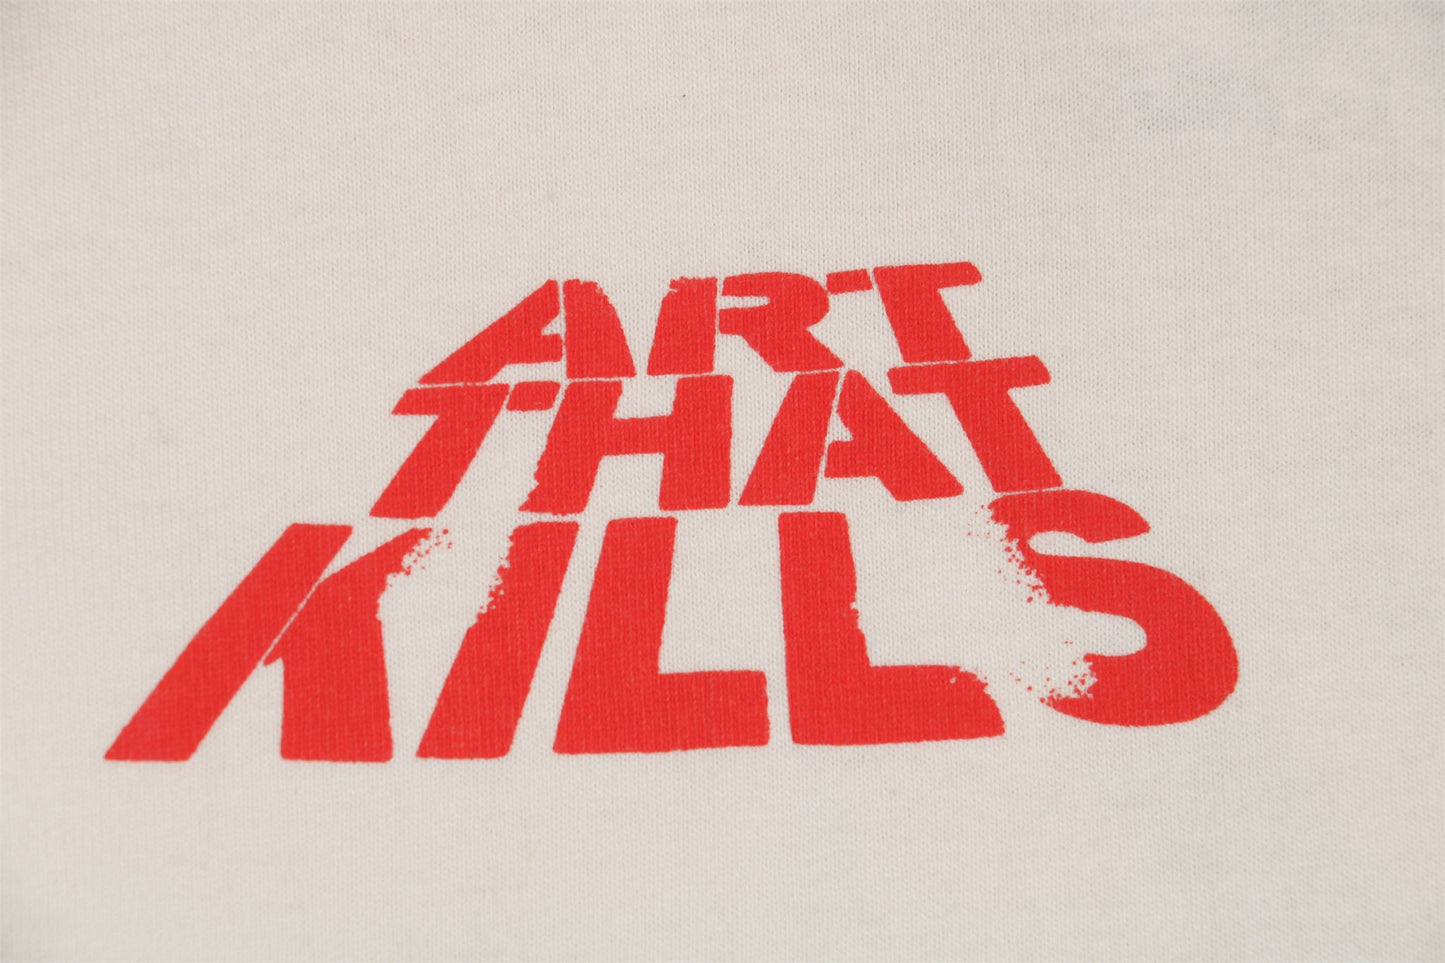 Gallery Dept Art That Kills Cream T-Shirt